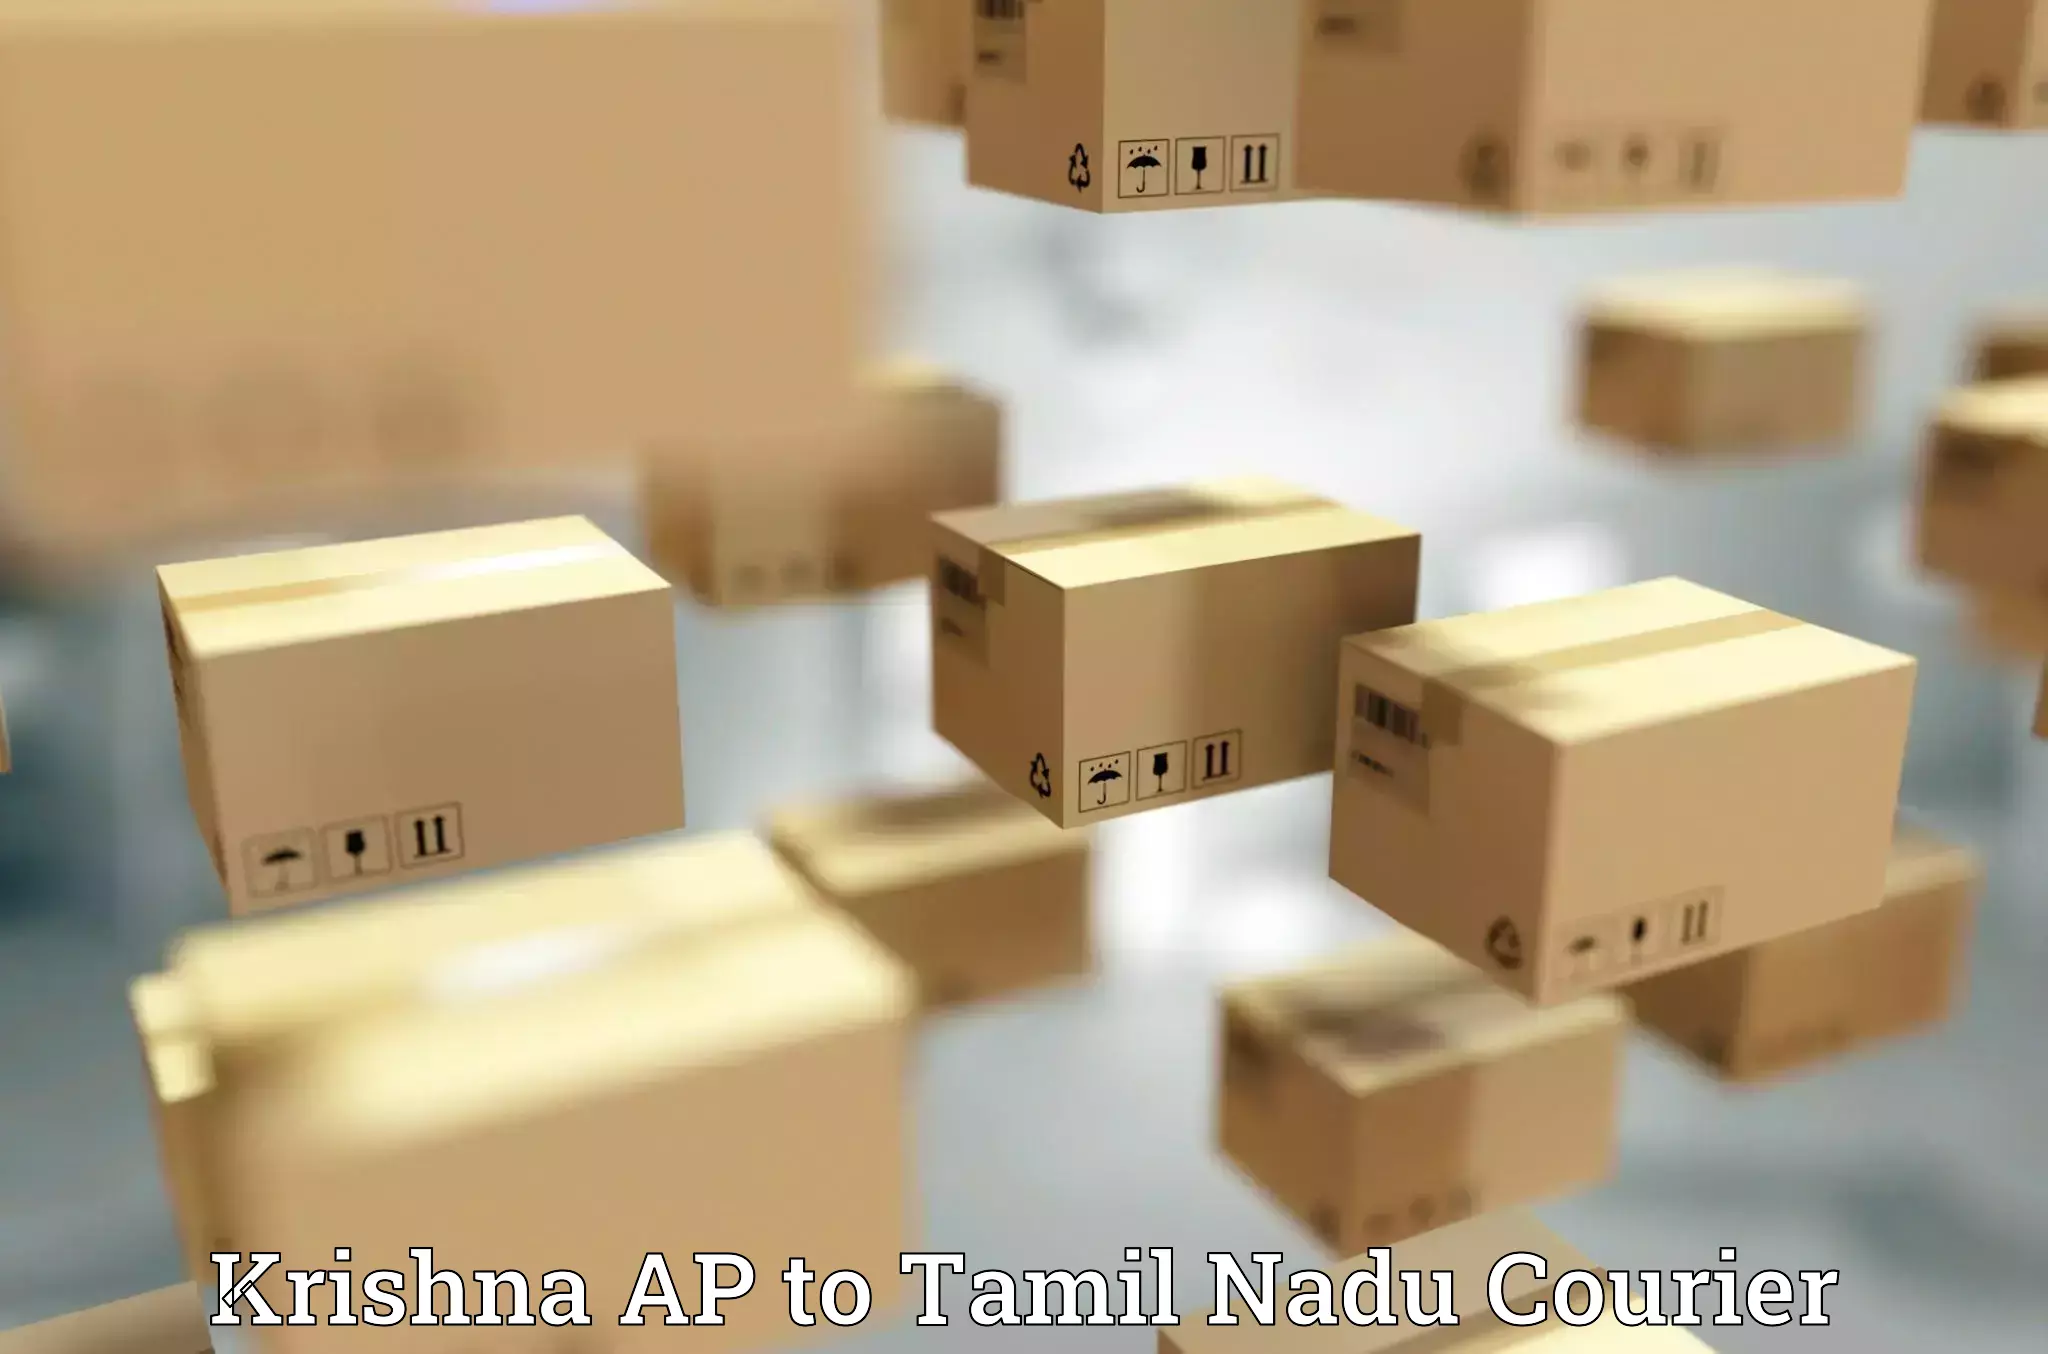 Courier app Krishna AP to Tamil Nadu